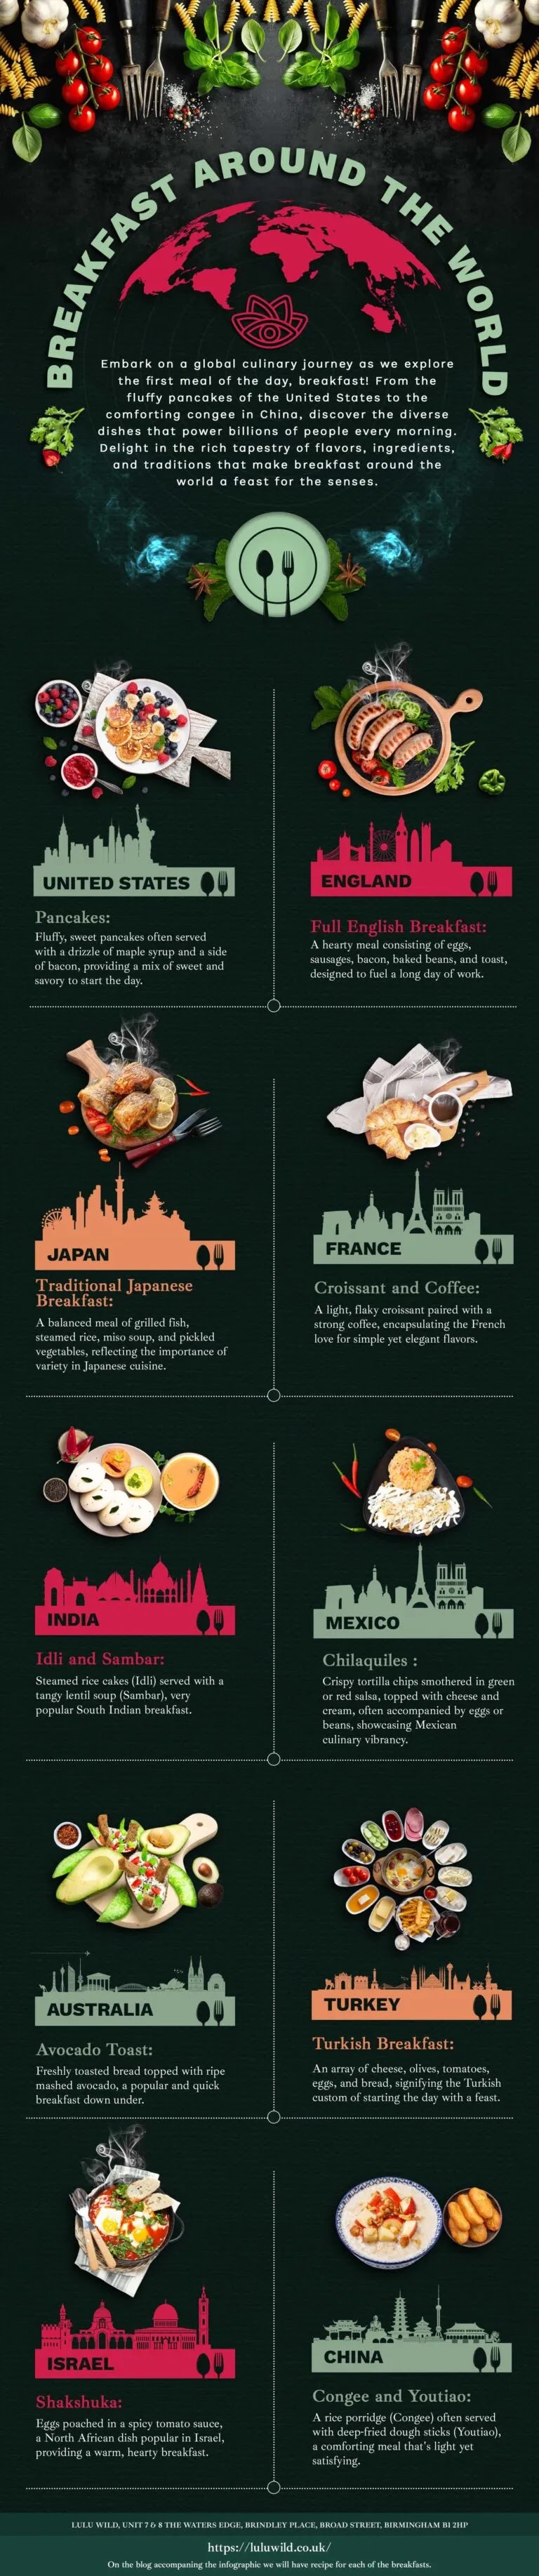 Breakfast Around The World #infographic